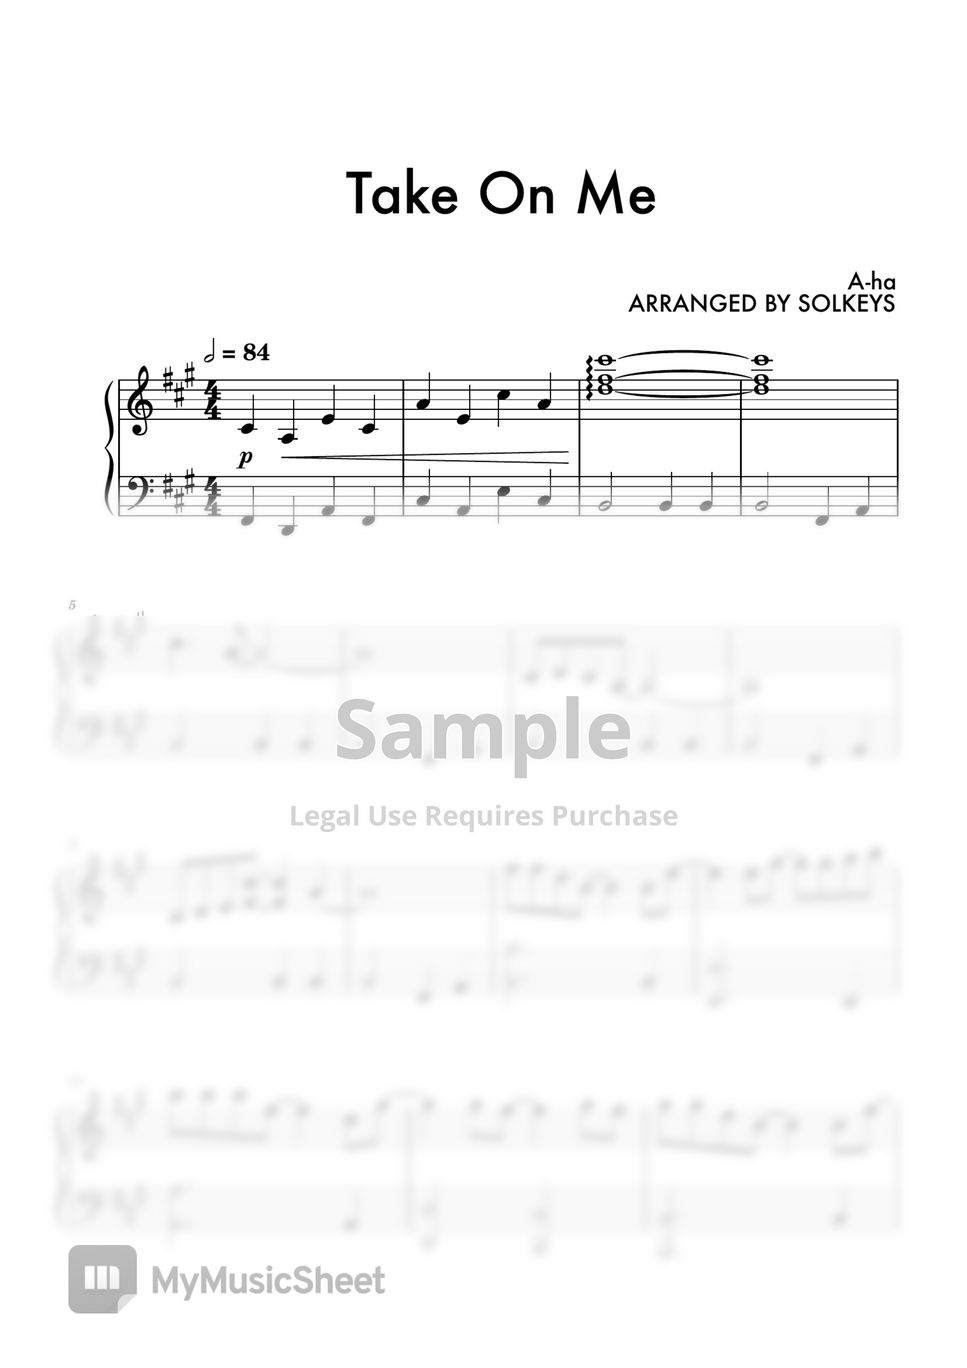 A-Ha - Take On Me by SolKeys